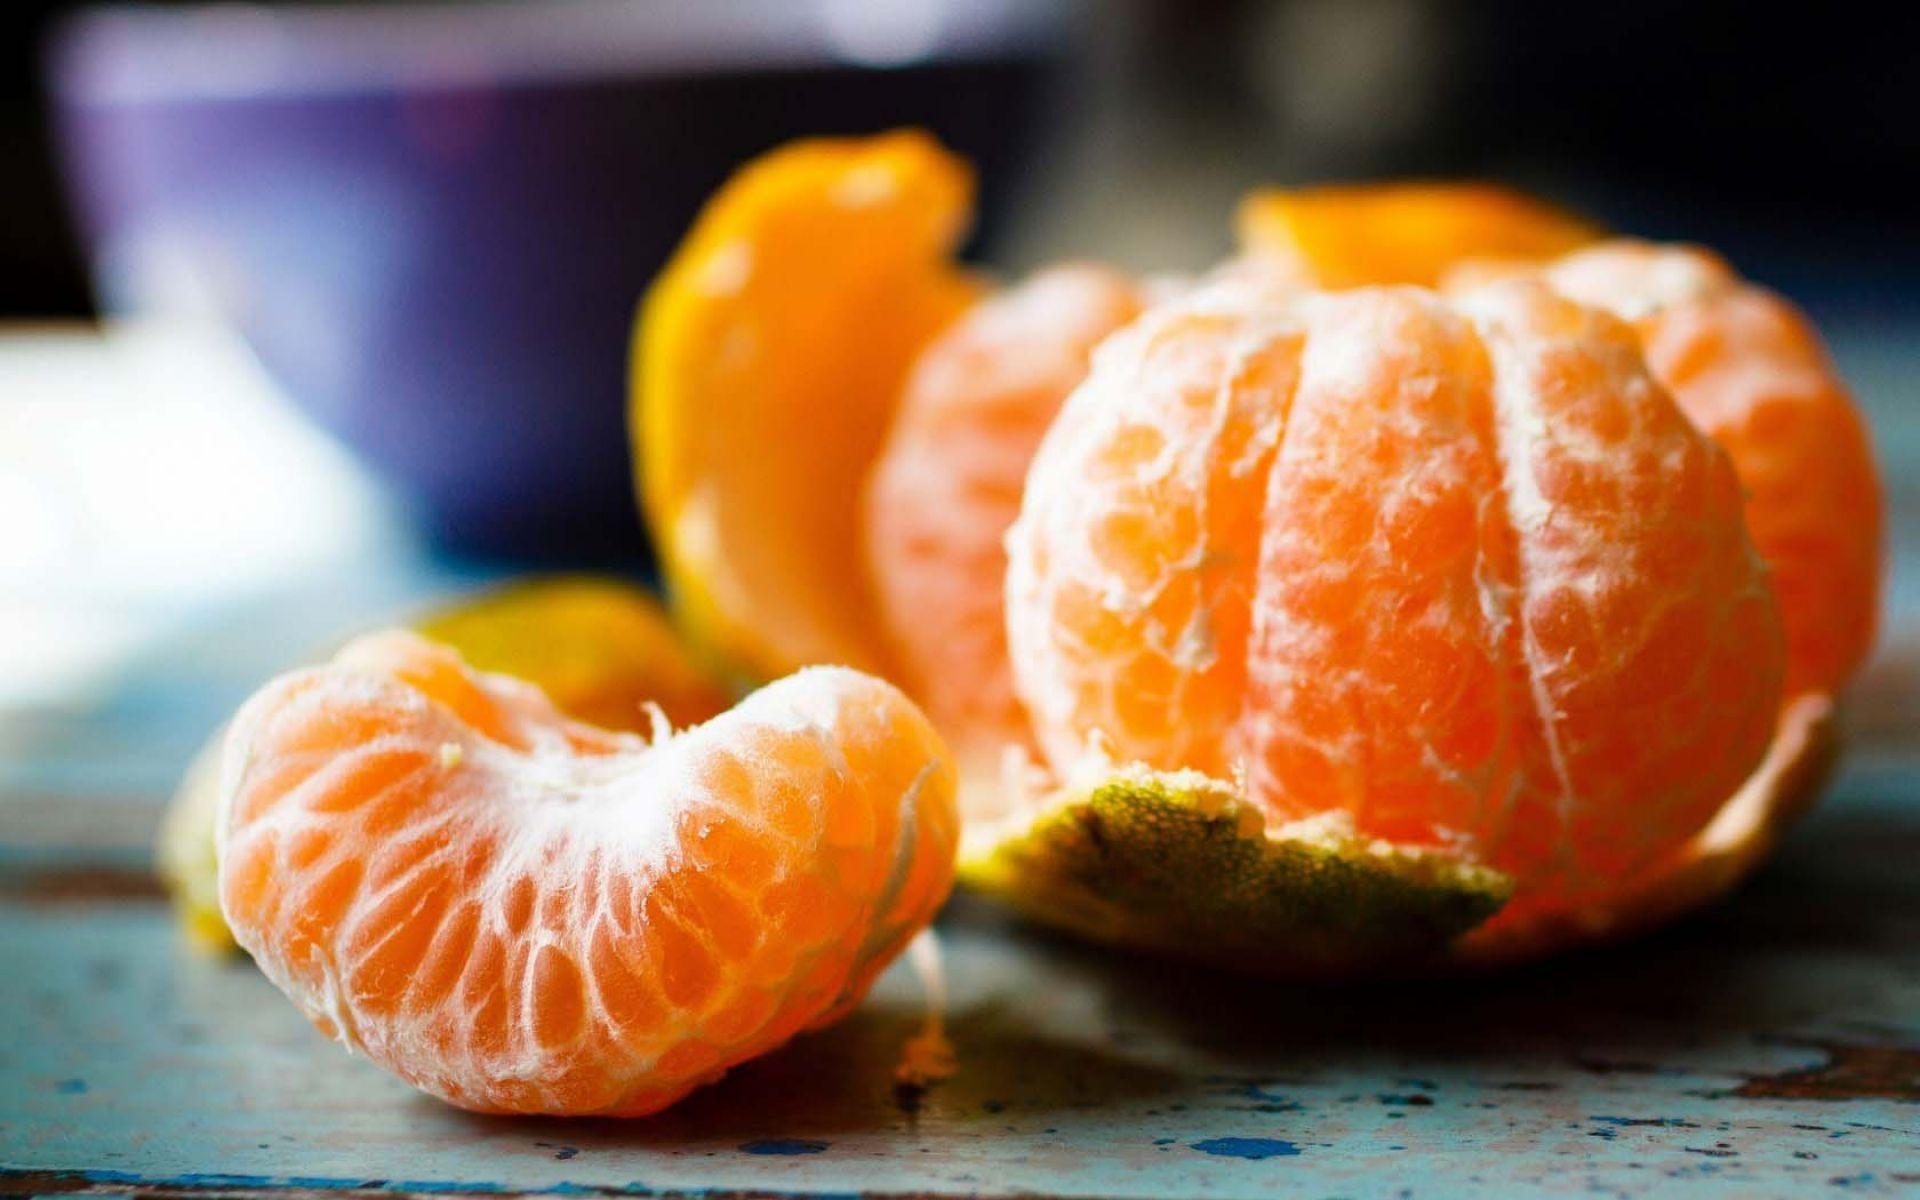 Mandarin Orange Citrus Fruit Wallpaper. HD Chocolates and Fruits